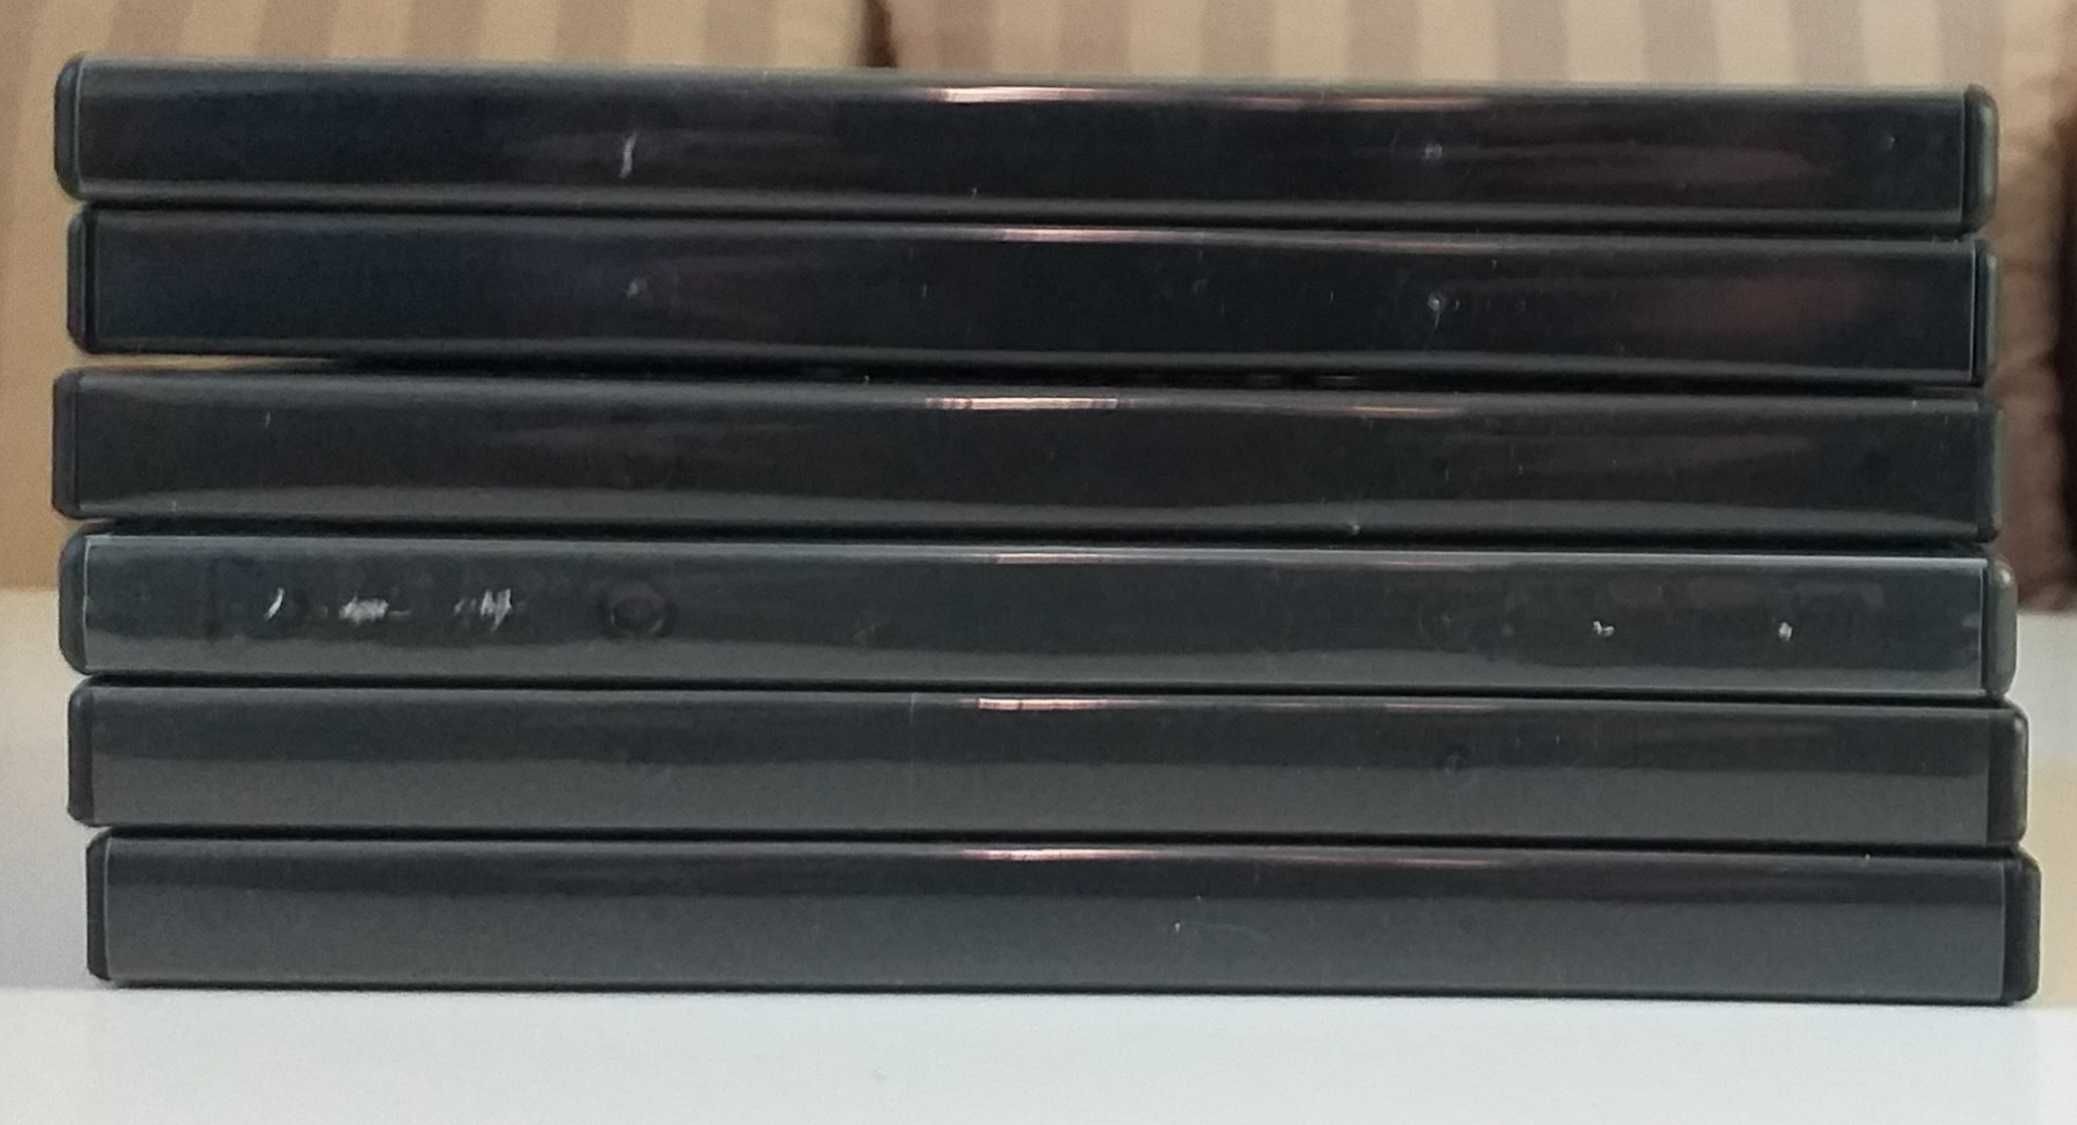 CD's/DVD's, caixas para guardar os seus CD